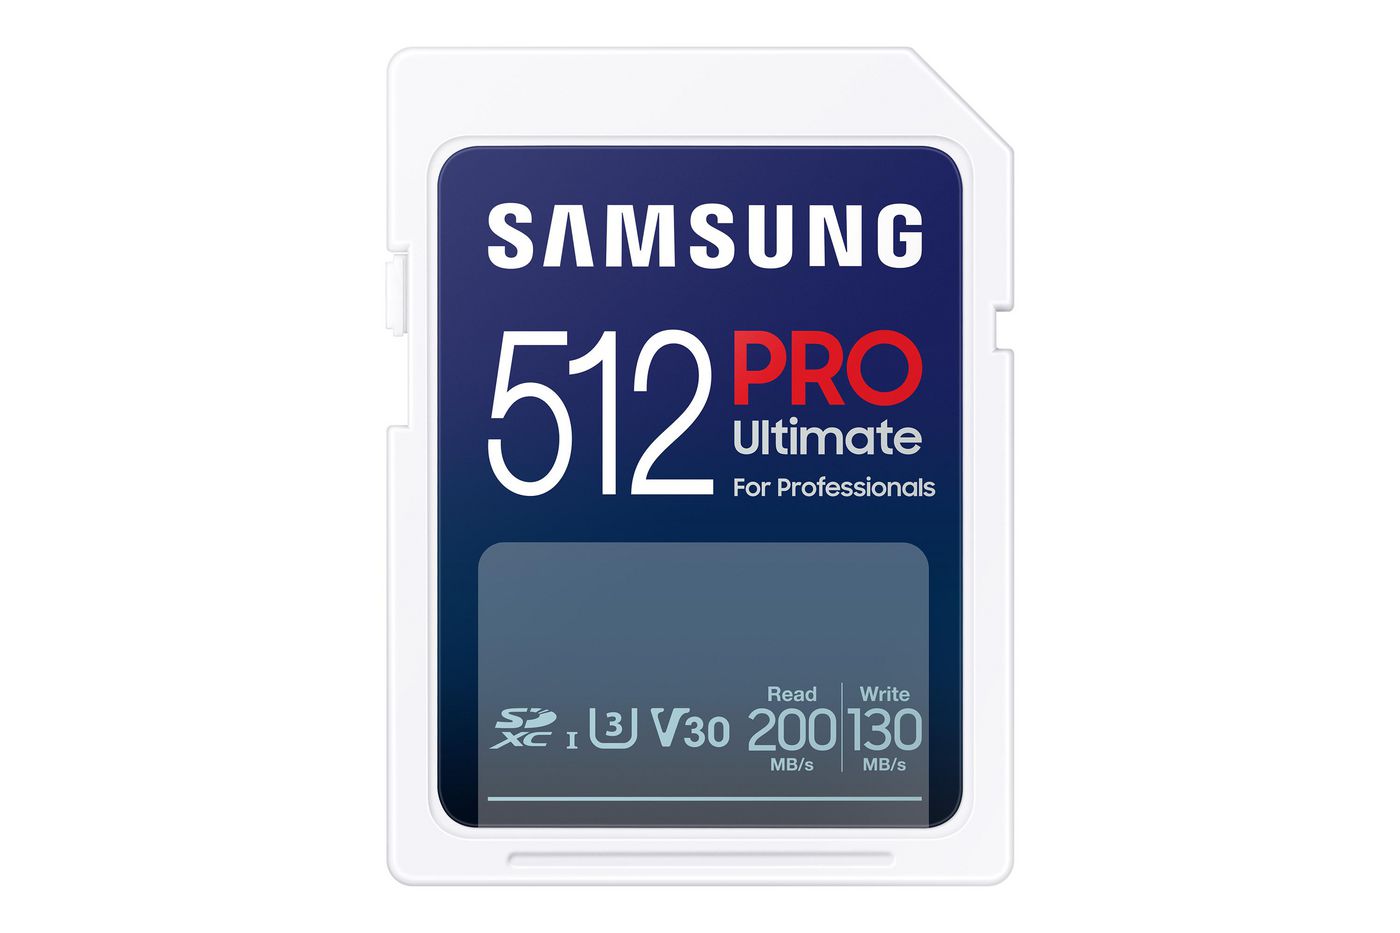 SAMSUNG SD PRO Ultimate 512GB